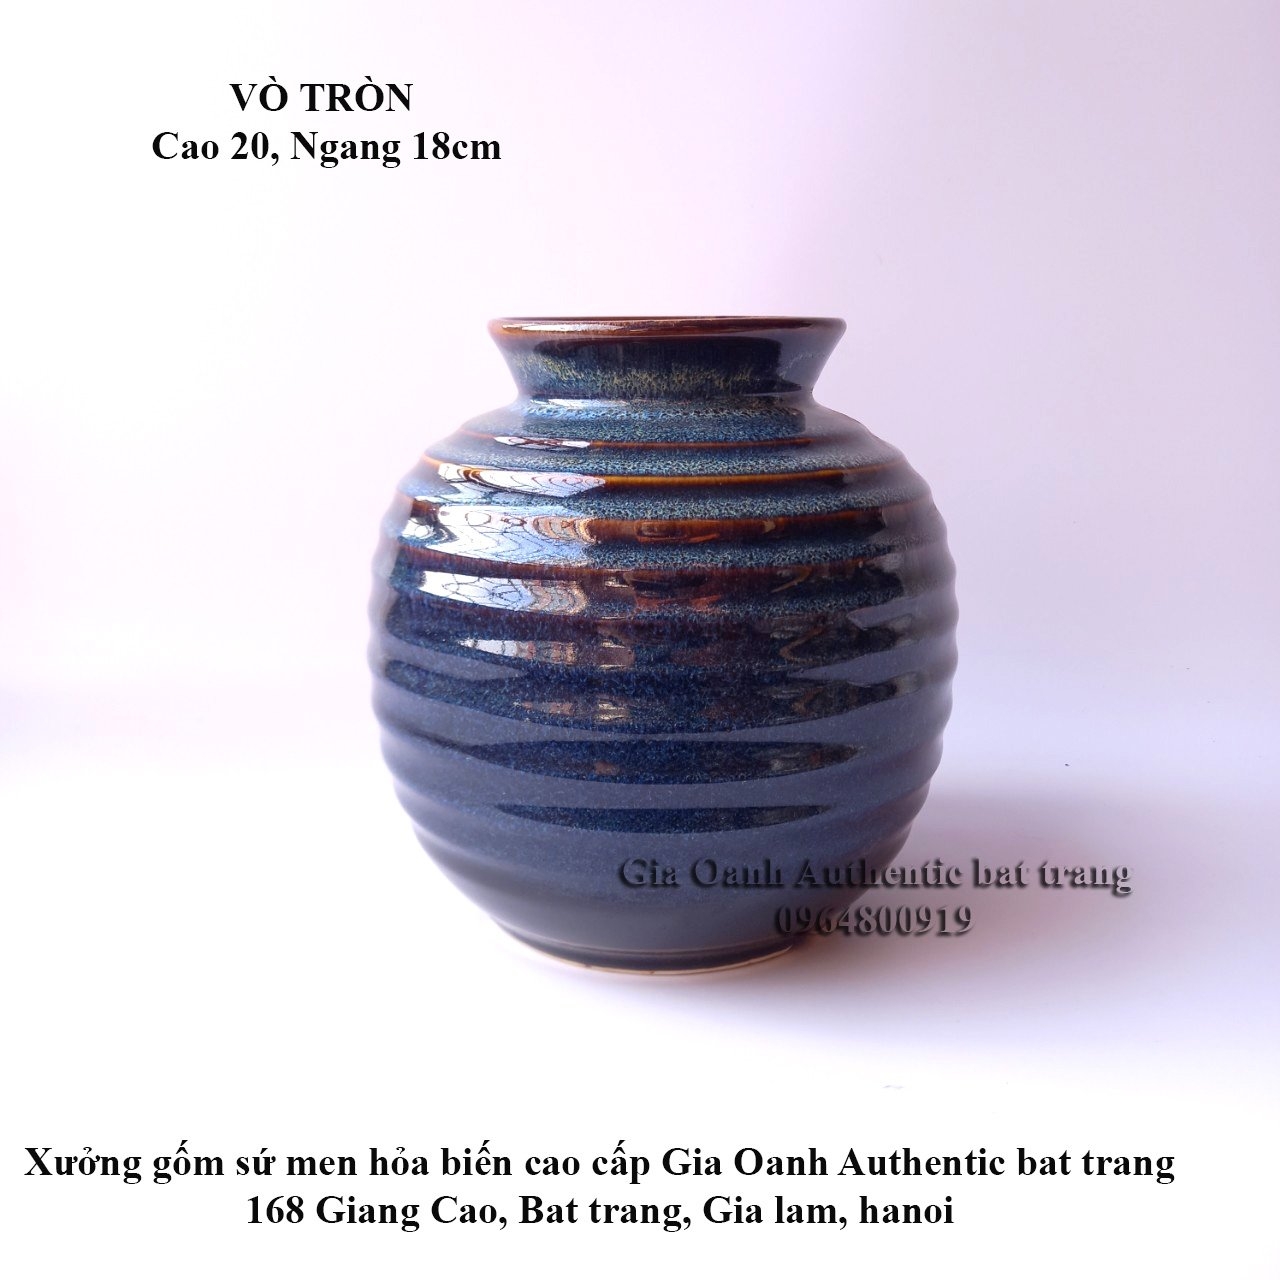 COLLECTIONS OF flower Vase, DECORATIVE Vase with blue Enamel - authentic bat trang CERAMIC FACTORY